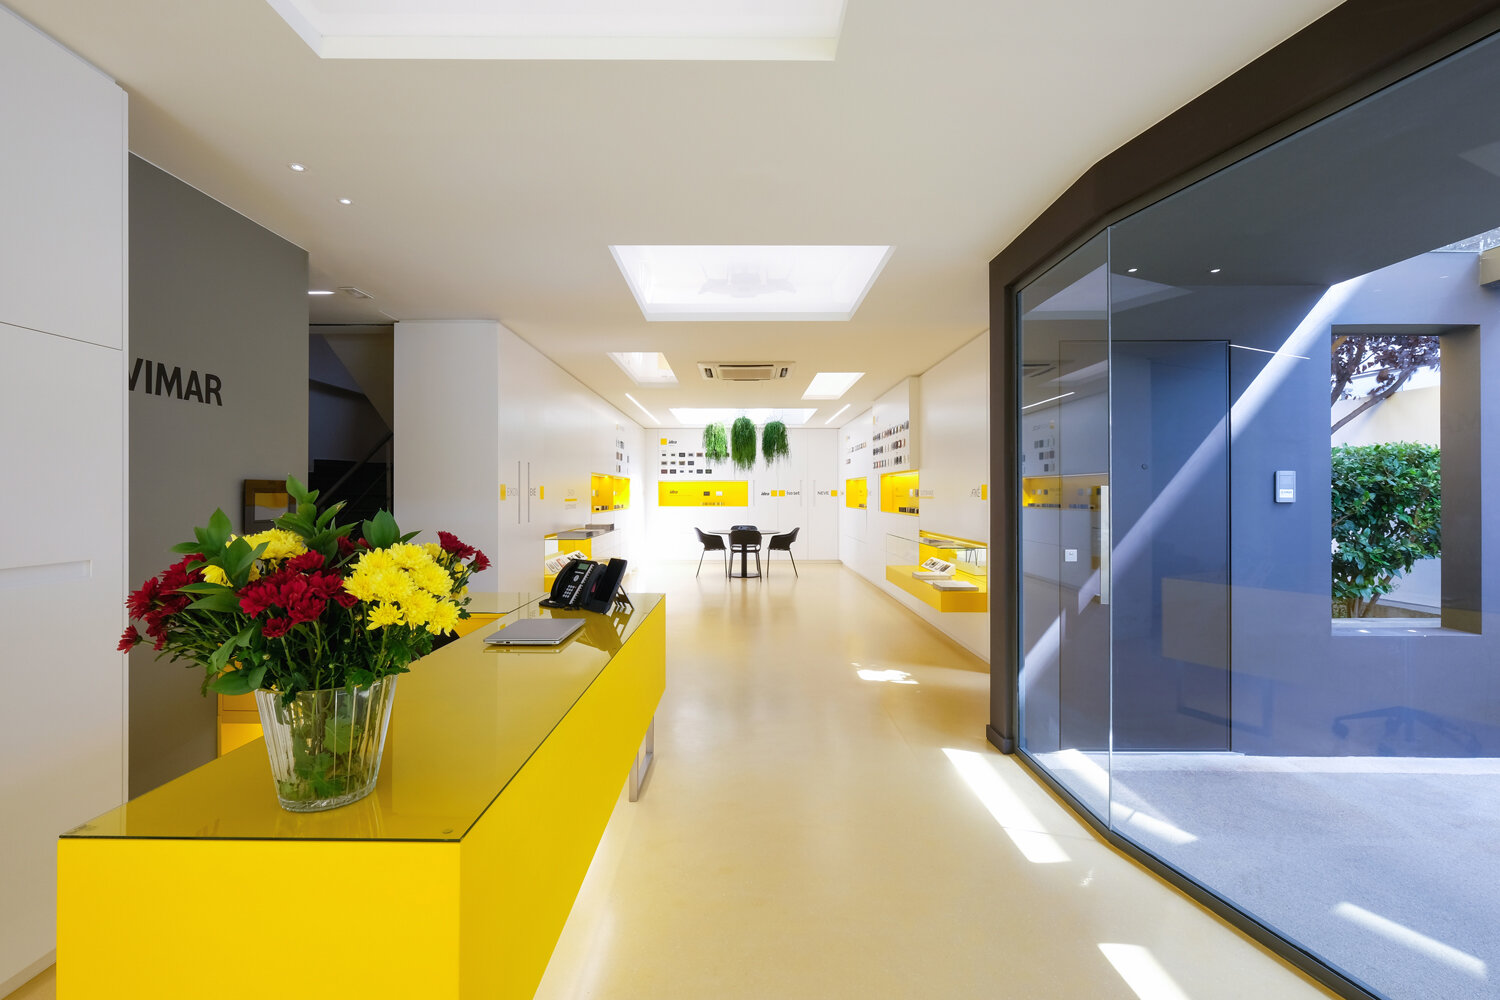  VIMAR Showroom,  Elena Karoula Design/Architecture  